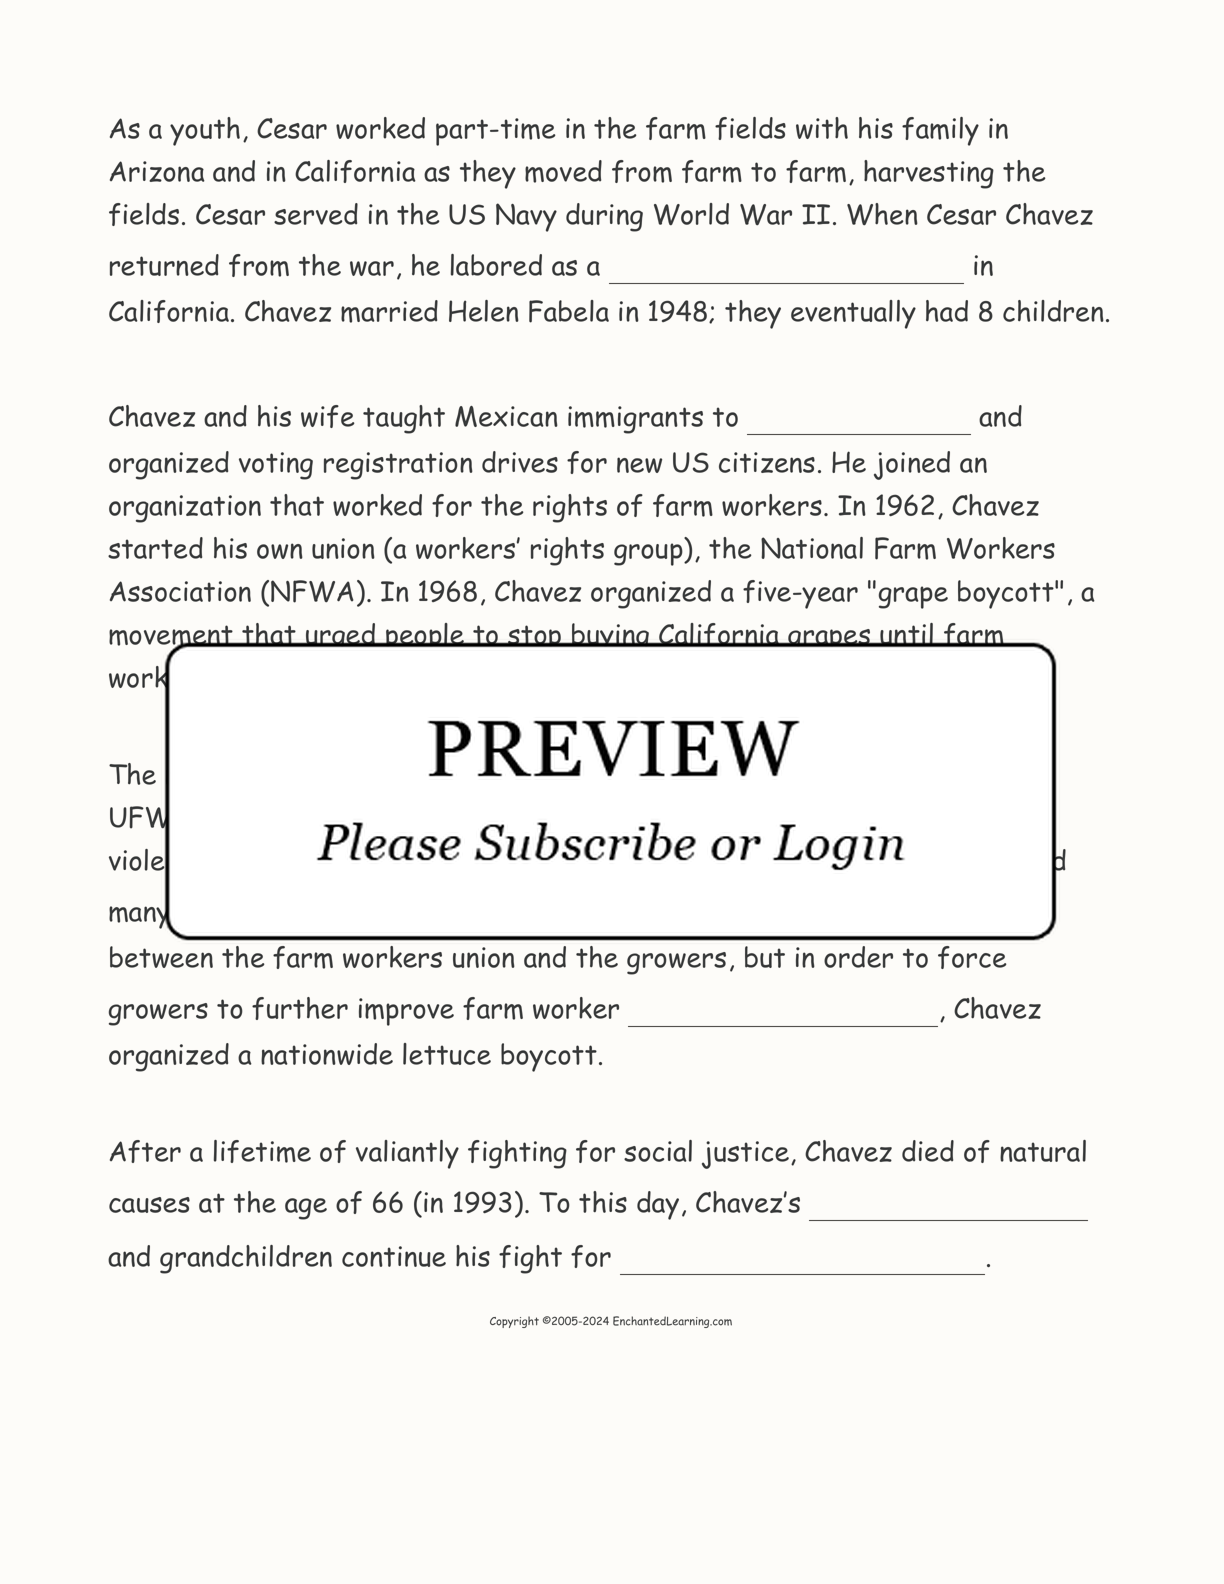 Cesar Chavez Biography: Cloze Activity interactive worksheet page 2